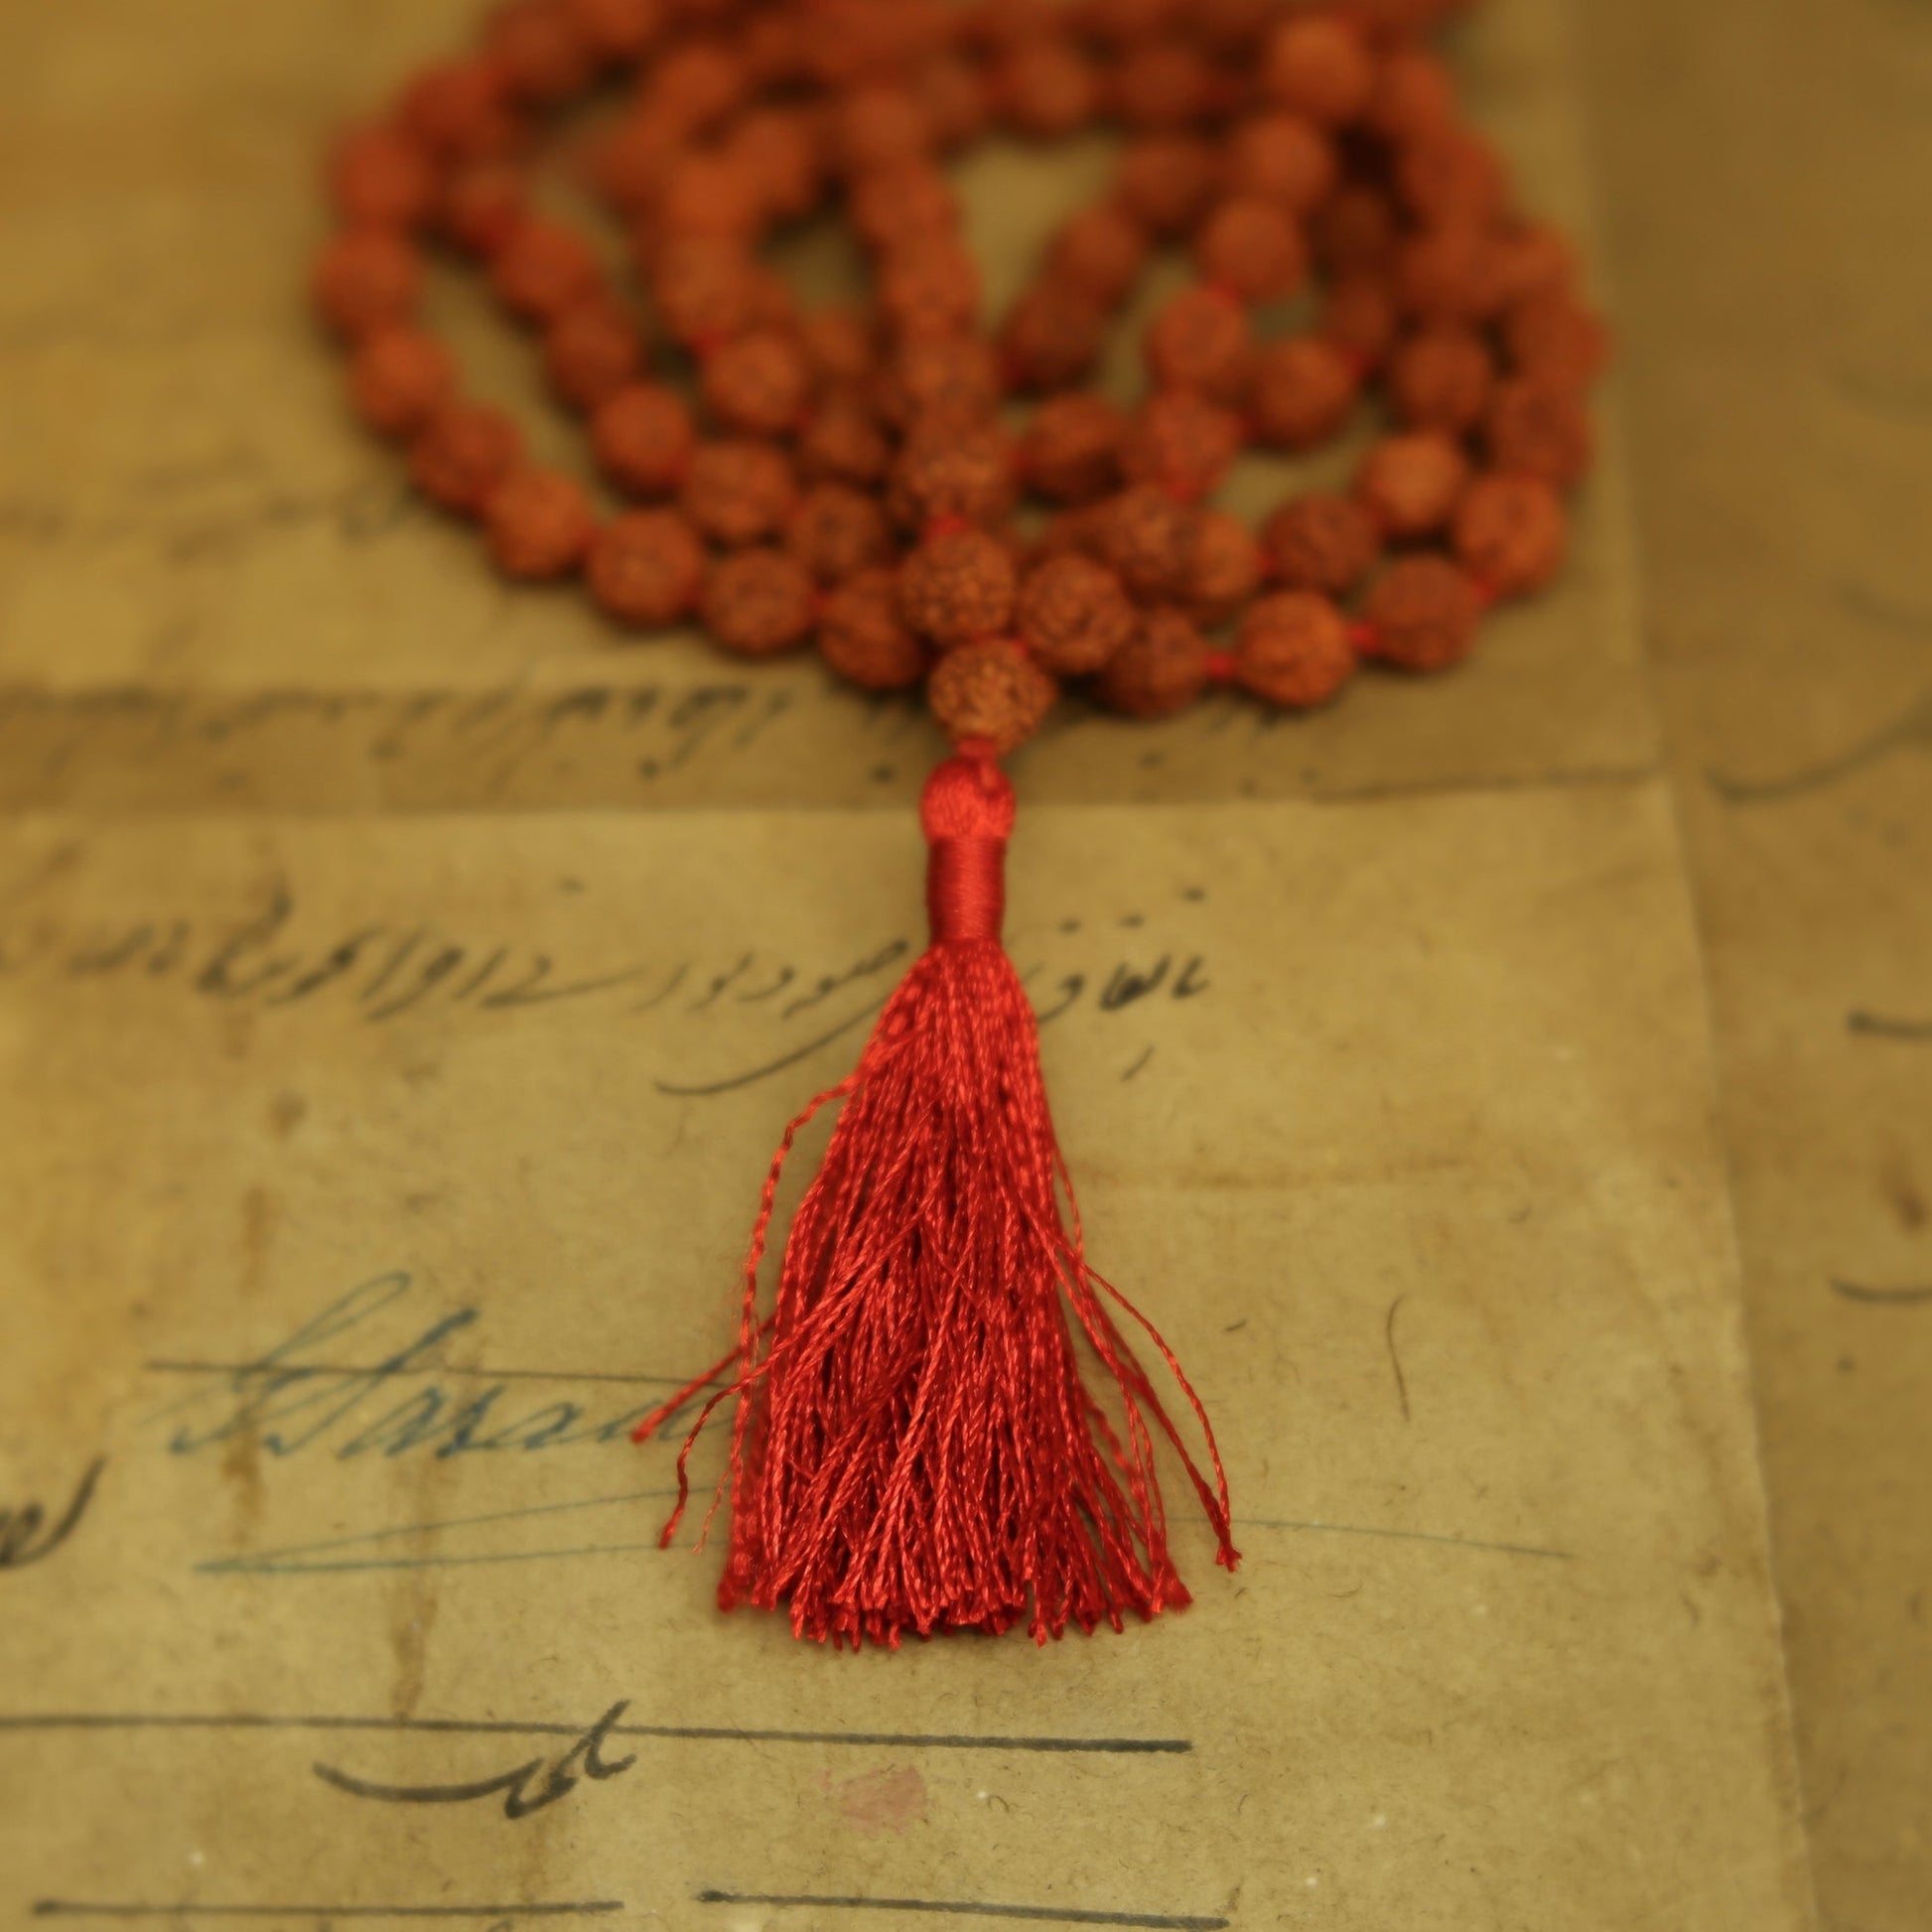 Rudraksha Mala - 108 Prayer Beads - Wholesale and Retail by Prabhuji's Gifts